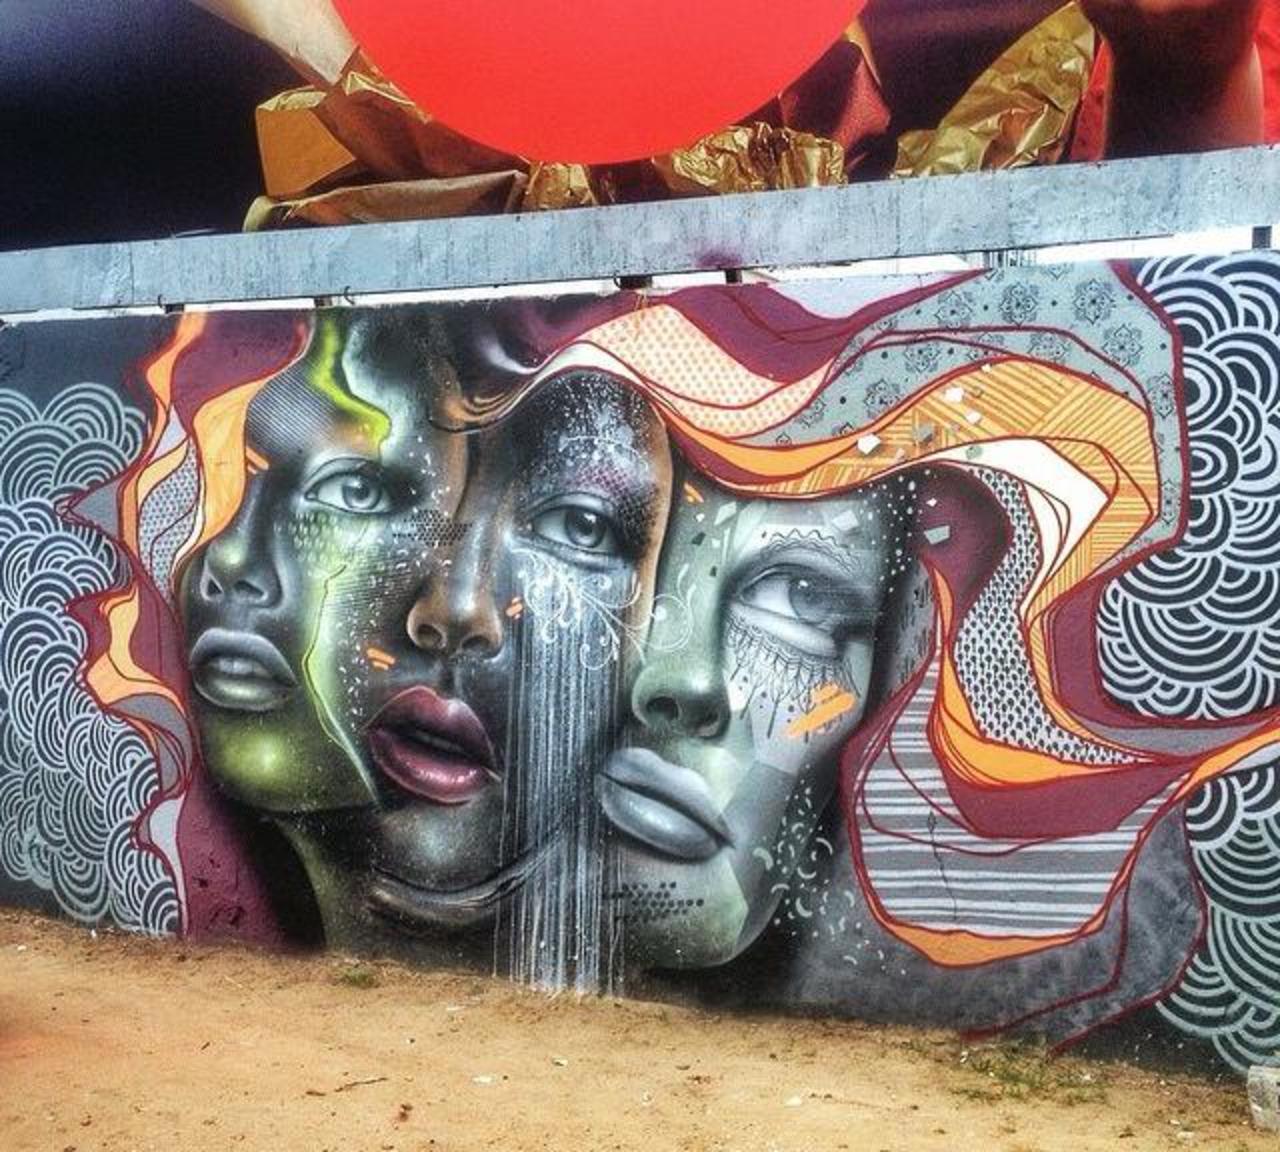 Amazing Street Art by AQI Luciano in Maceió, Brazil 

#art #arte #graffiti #streetart http://t.co/2RLd8KbsJz